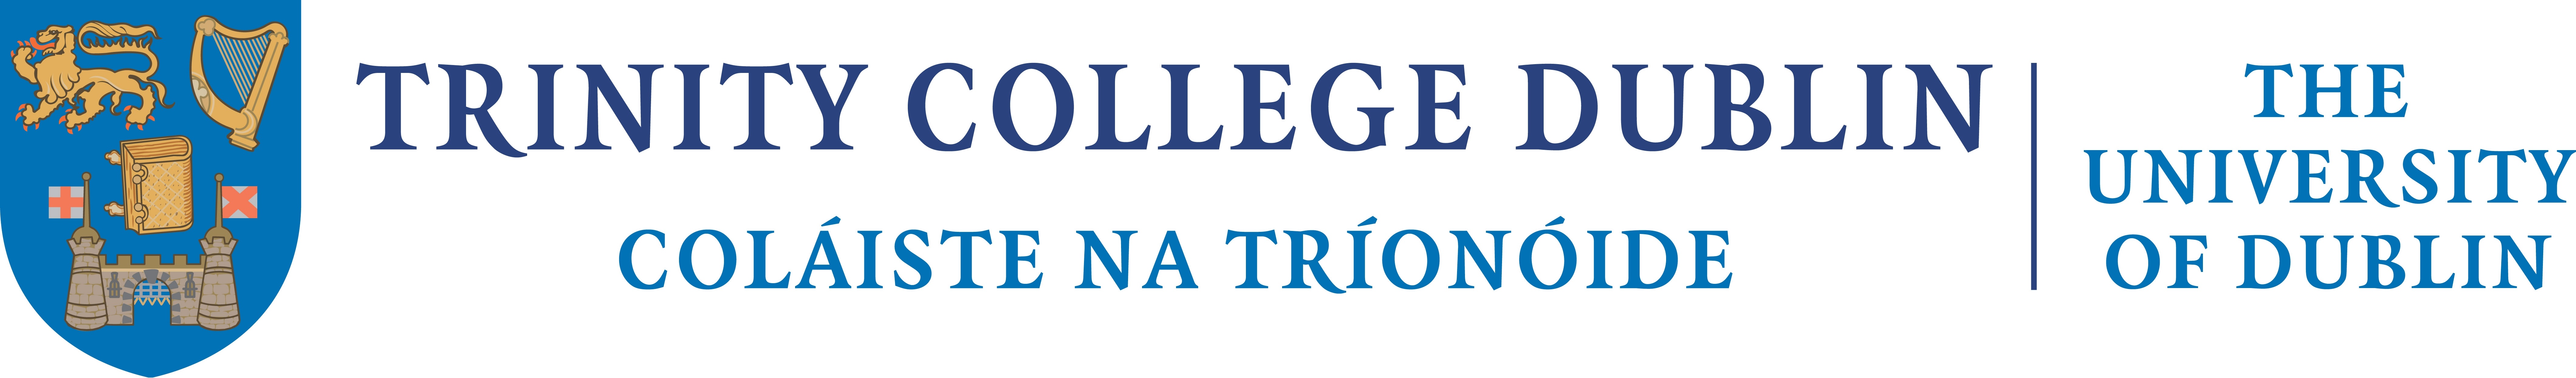 Trinity College Dublin, University of Dublin (TCD) logo